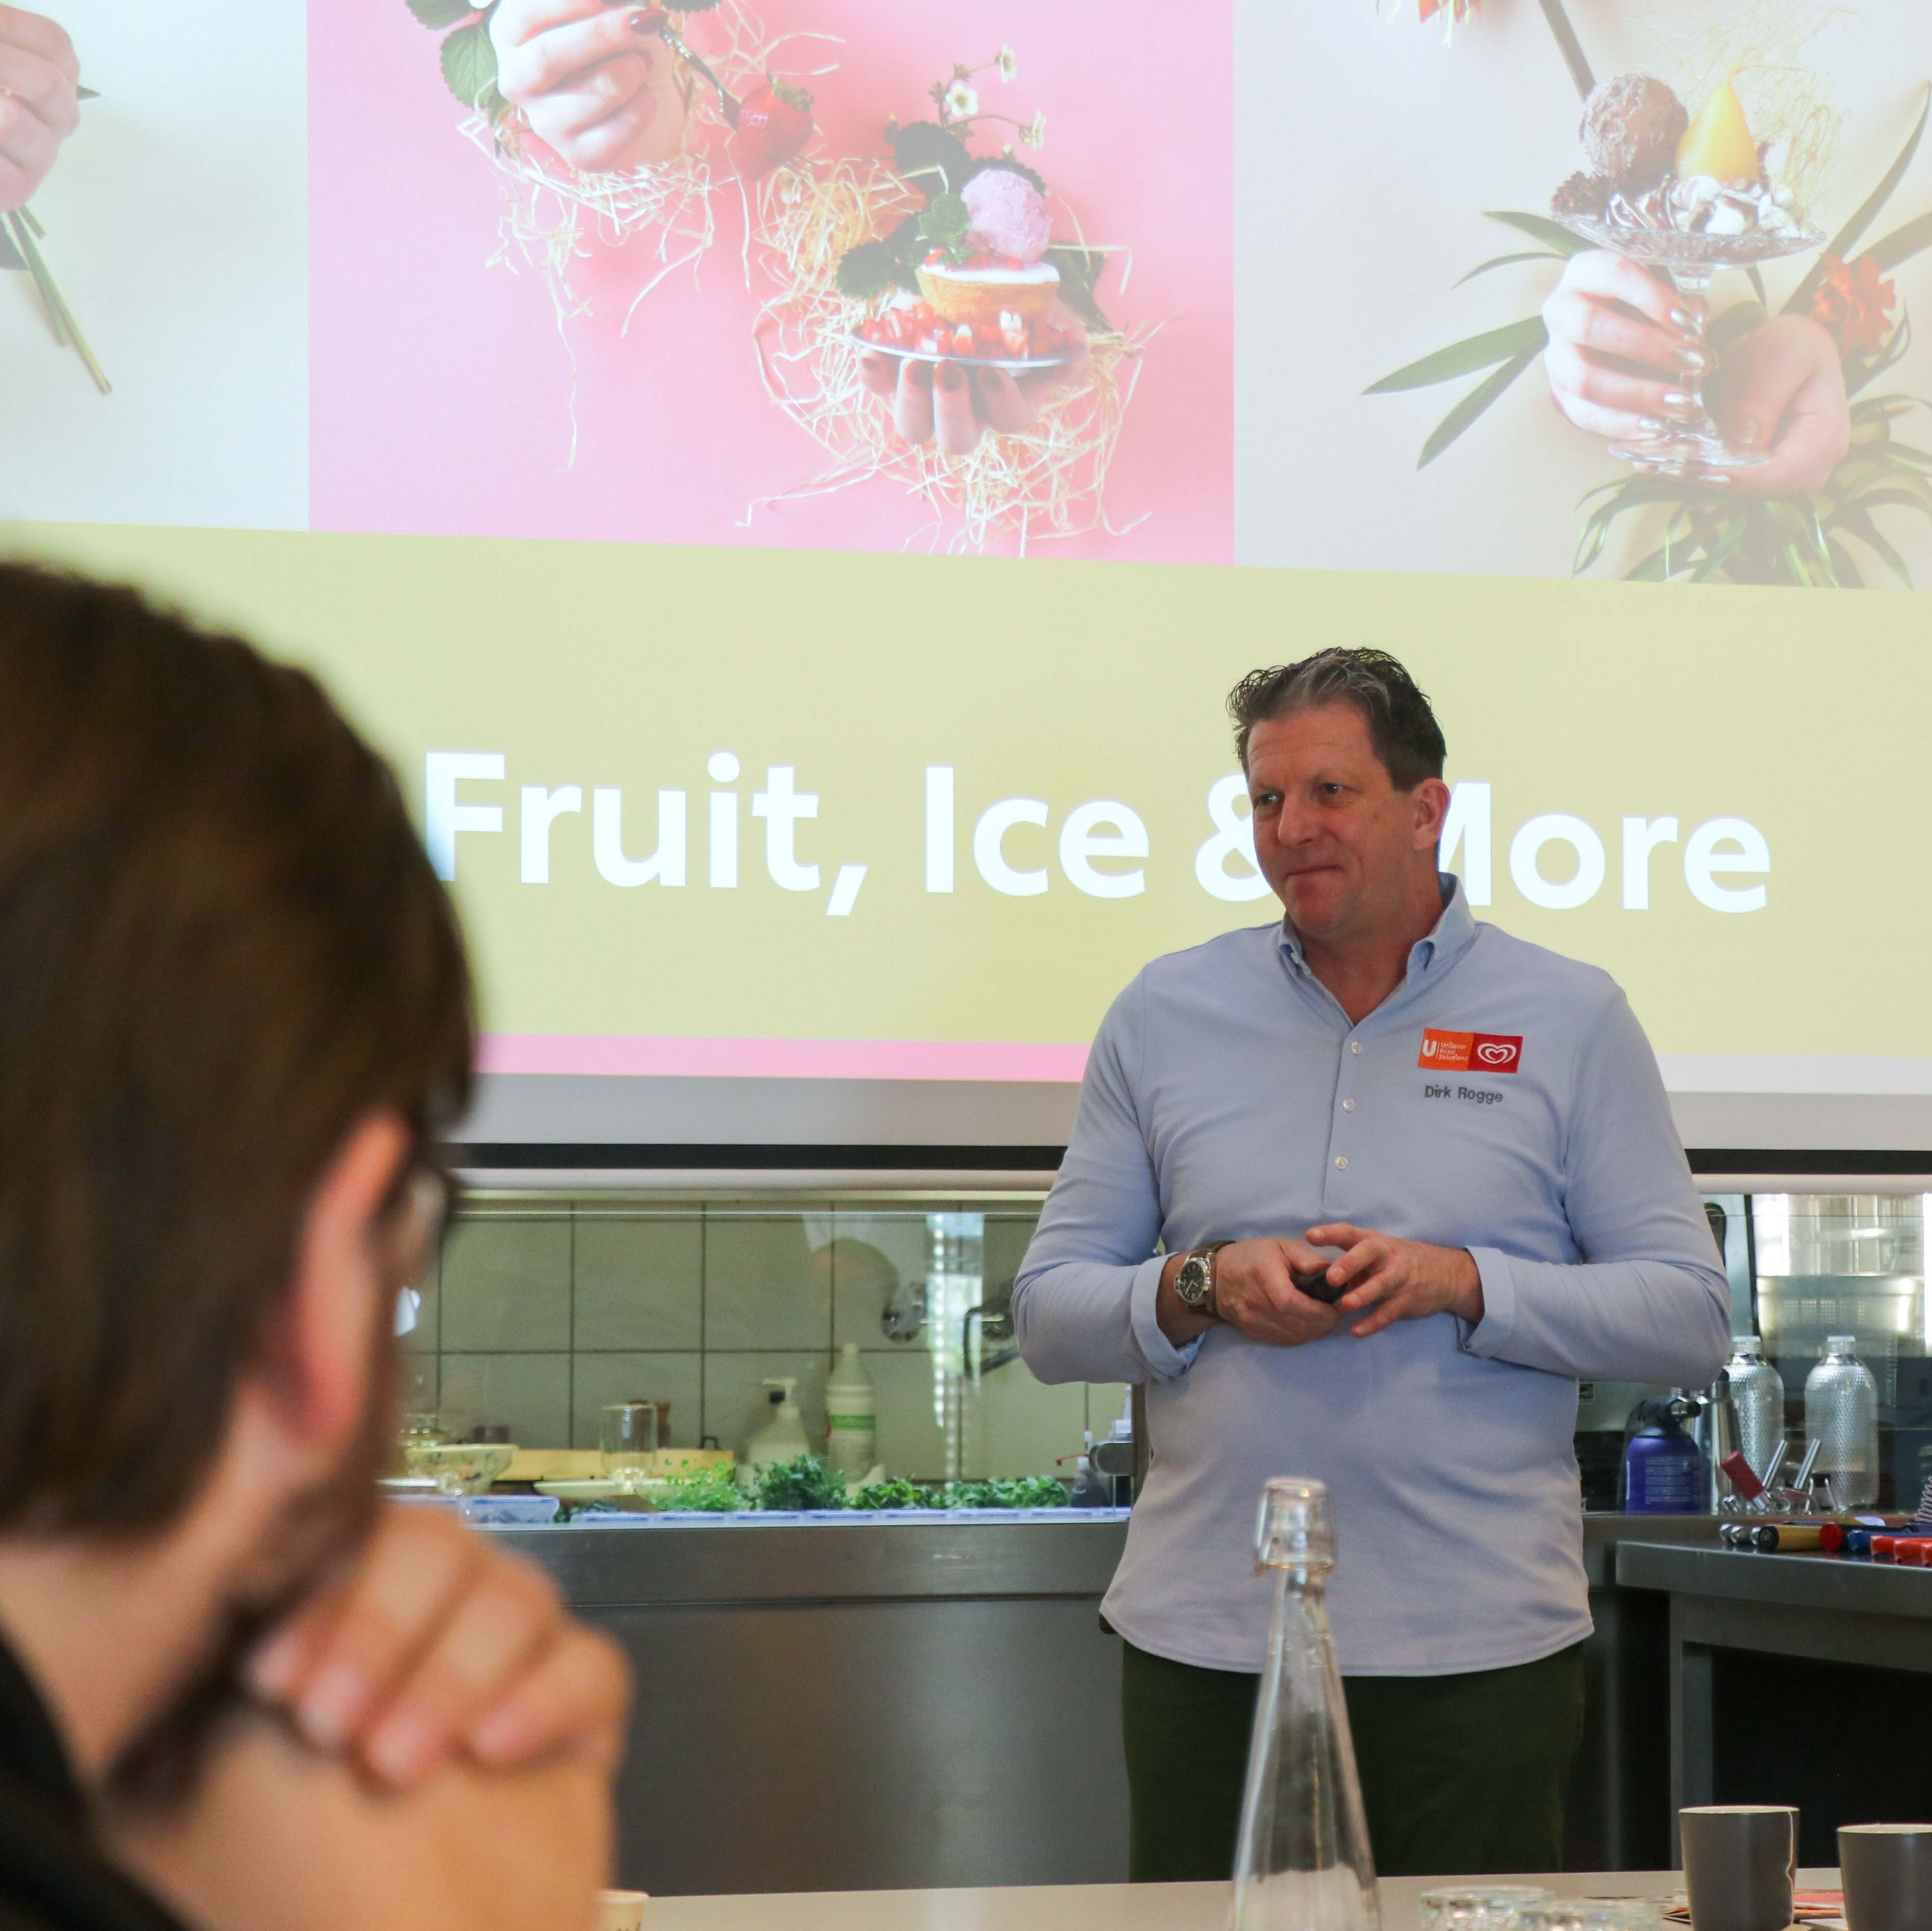 Dirk Rogge - Workshop "Fruit, Ice & More!